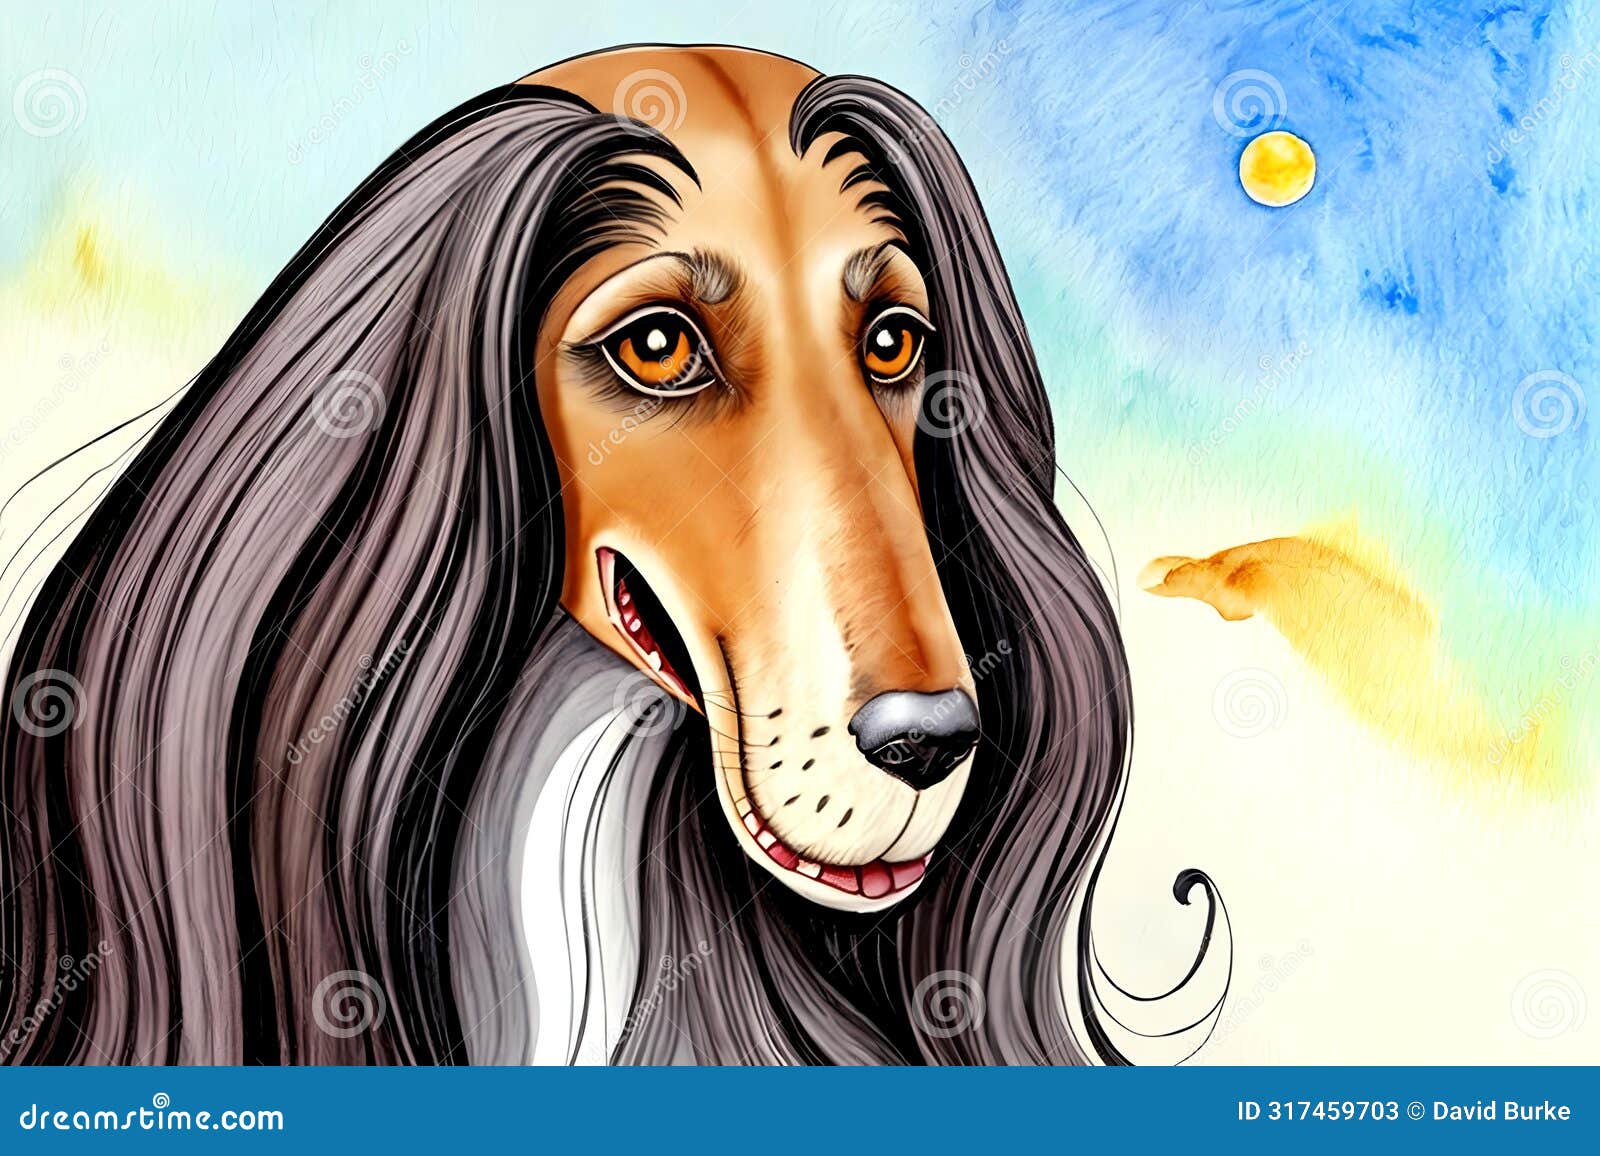 cartoon comic smile long hair hound dog line drawing comical artist